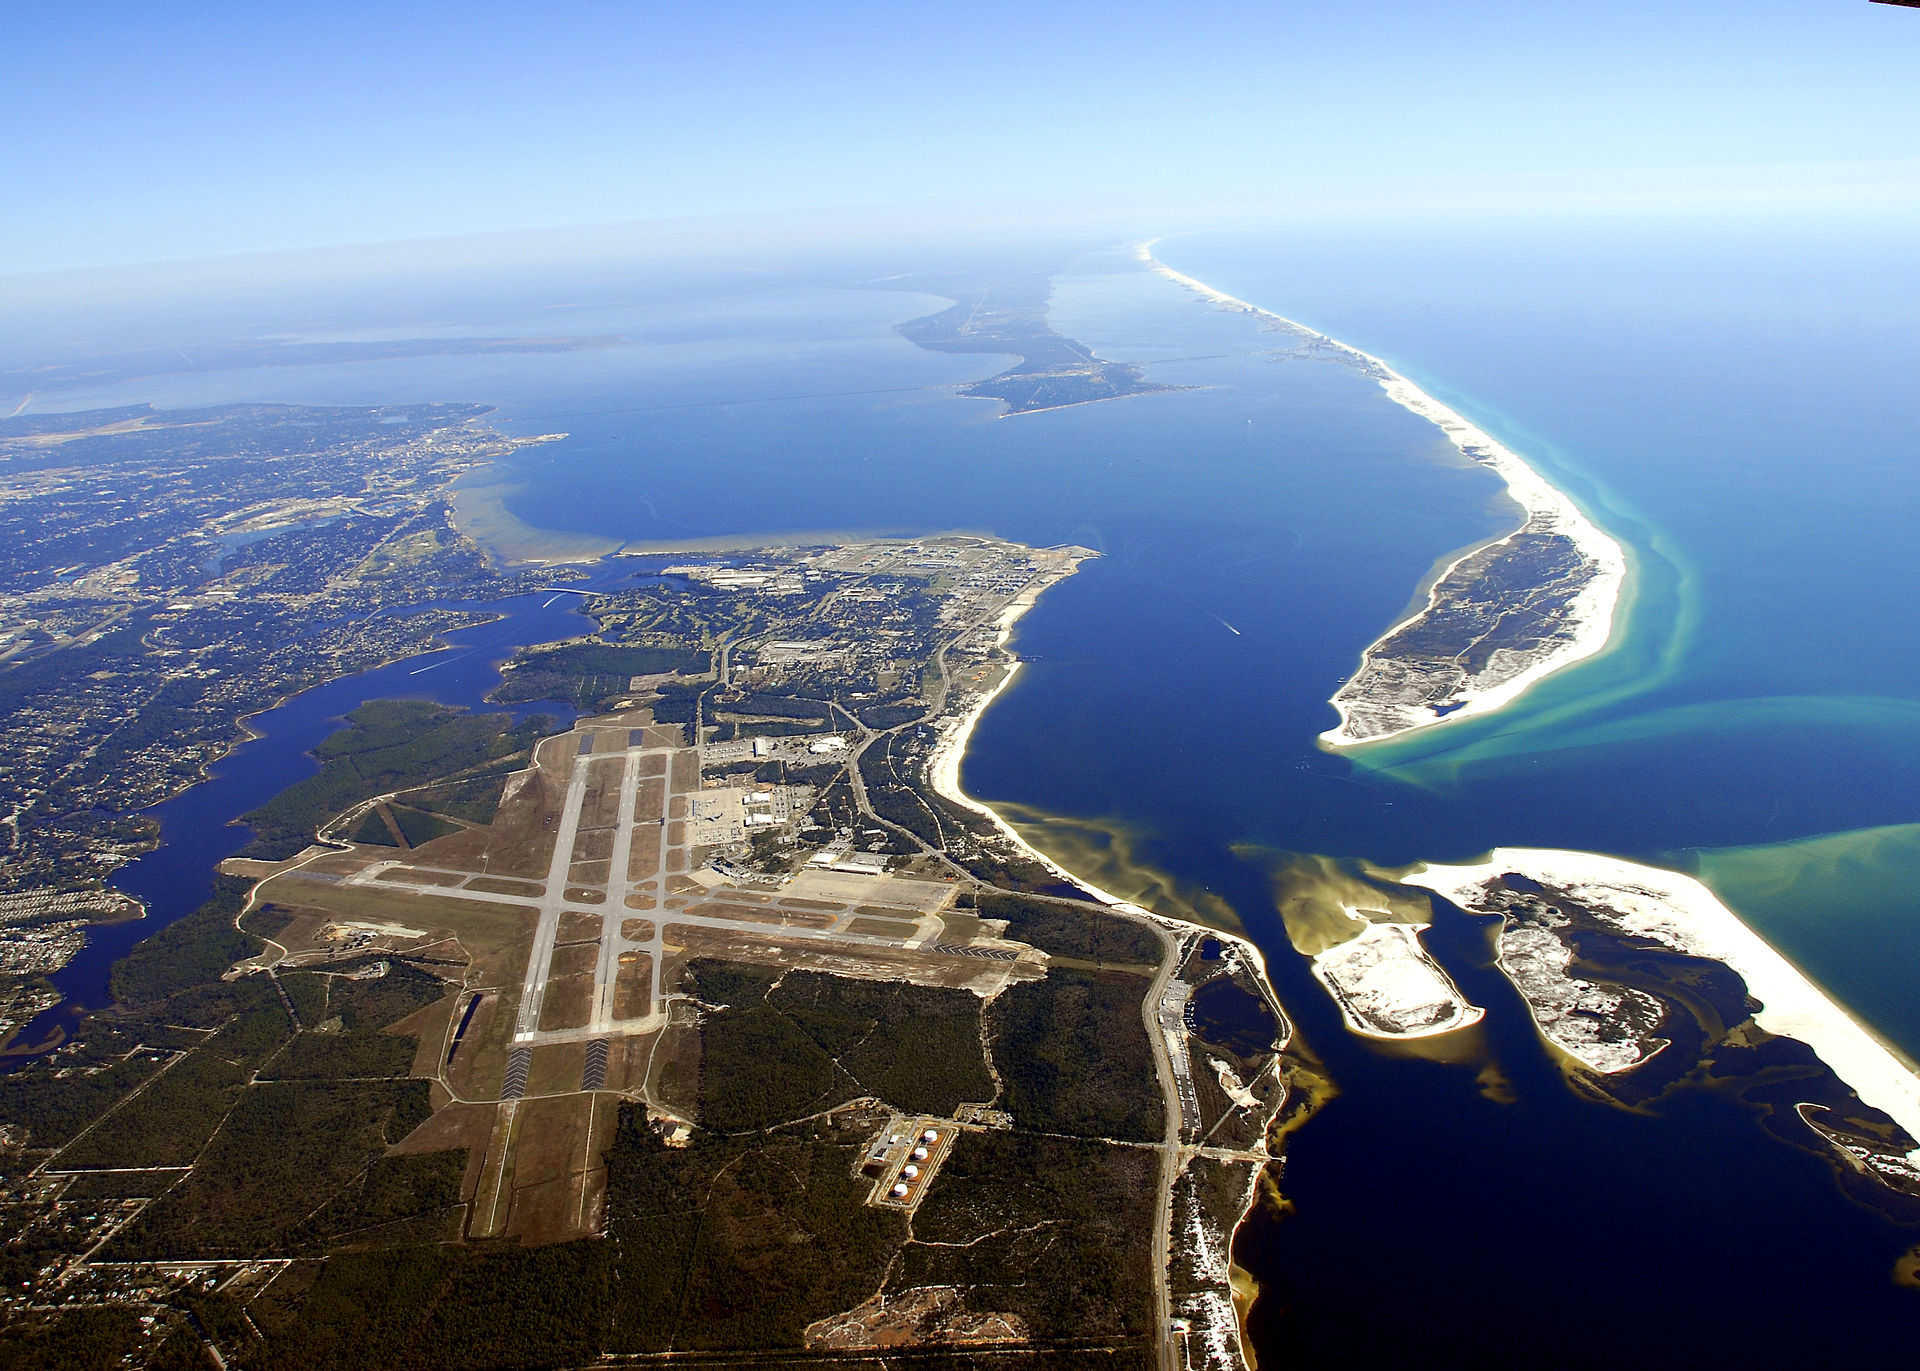 Naval Air Base, Pensacola Florida. Image Source: voanews.com